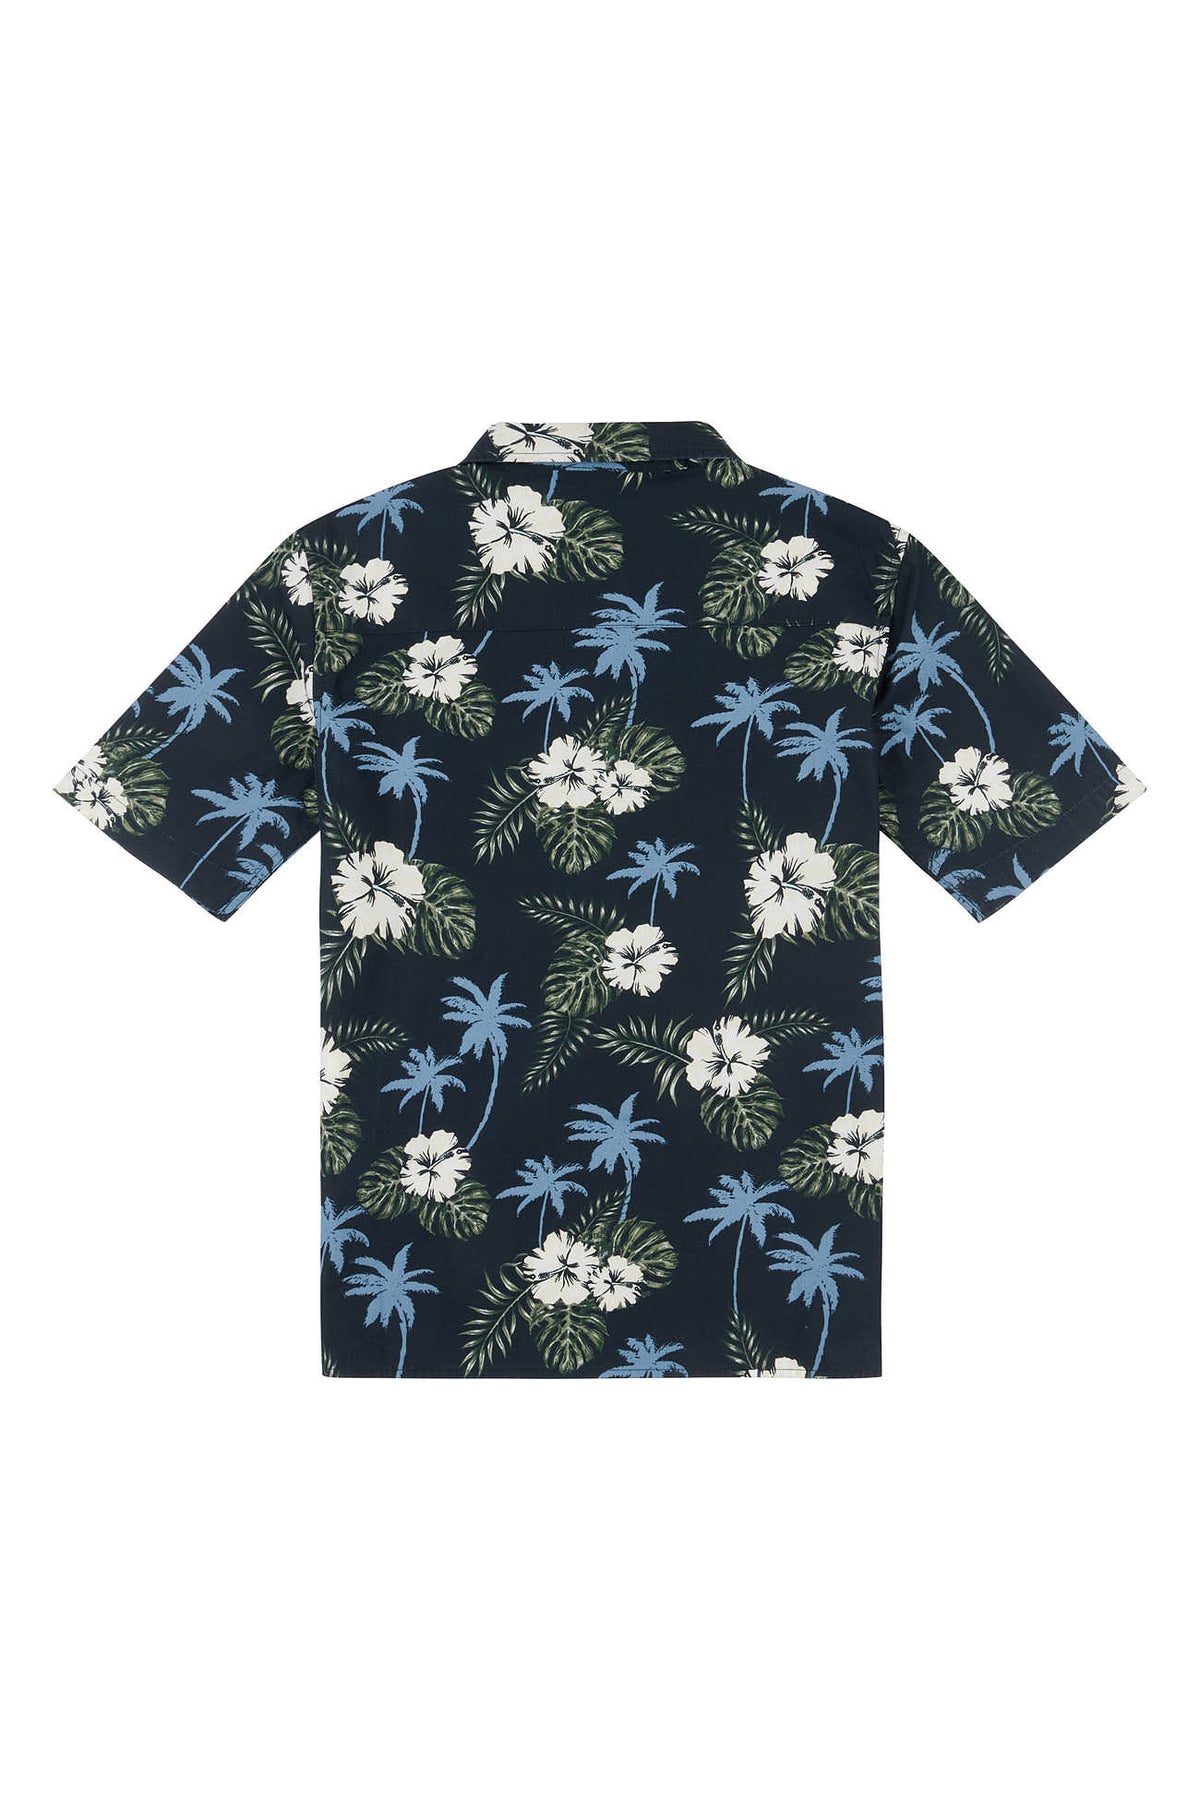 Boys Tropical Print Short Sleeve Shirt in Navy Blue